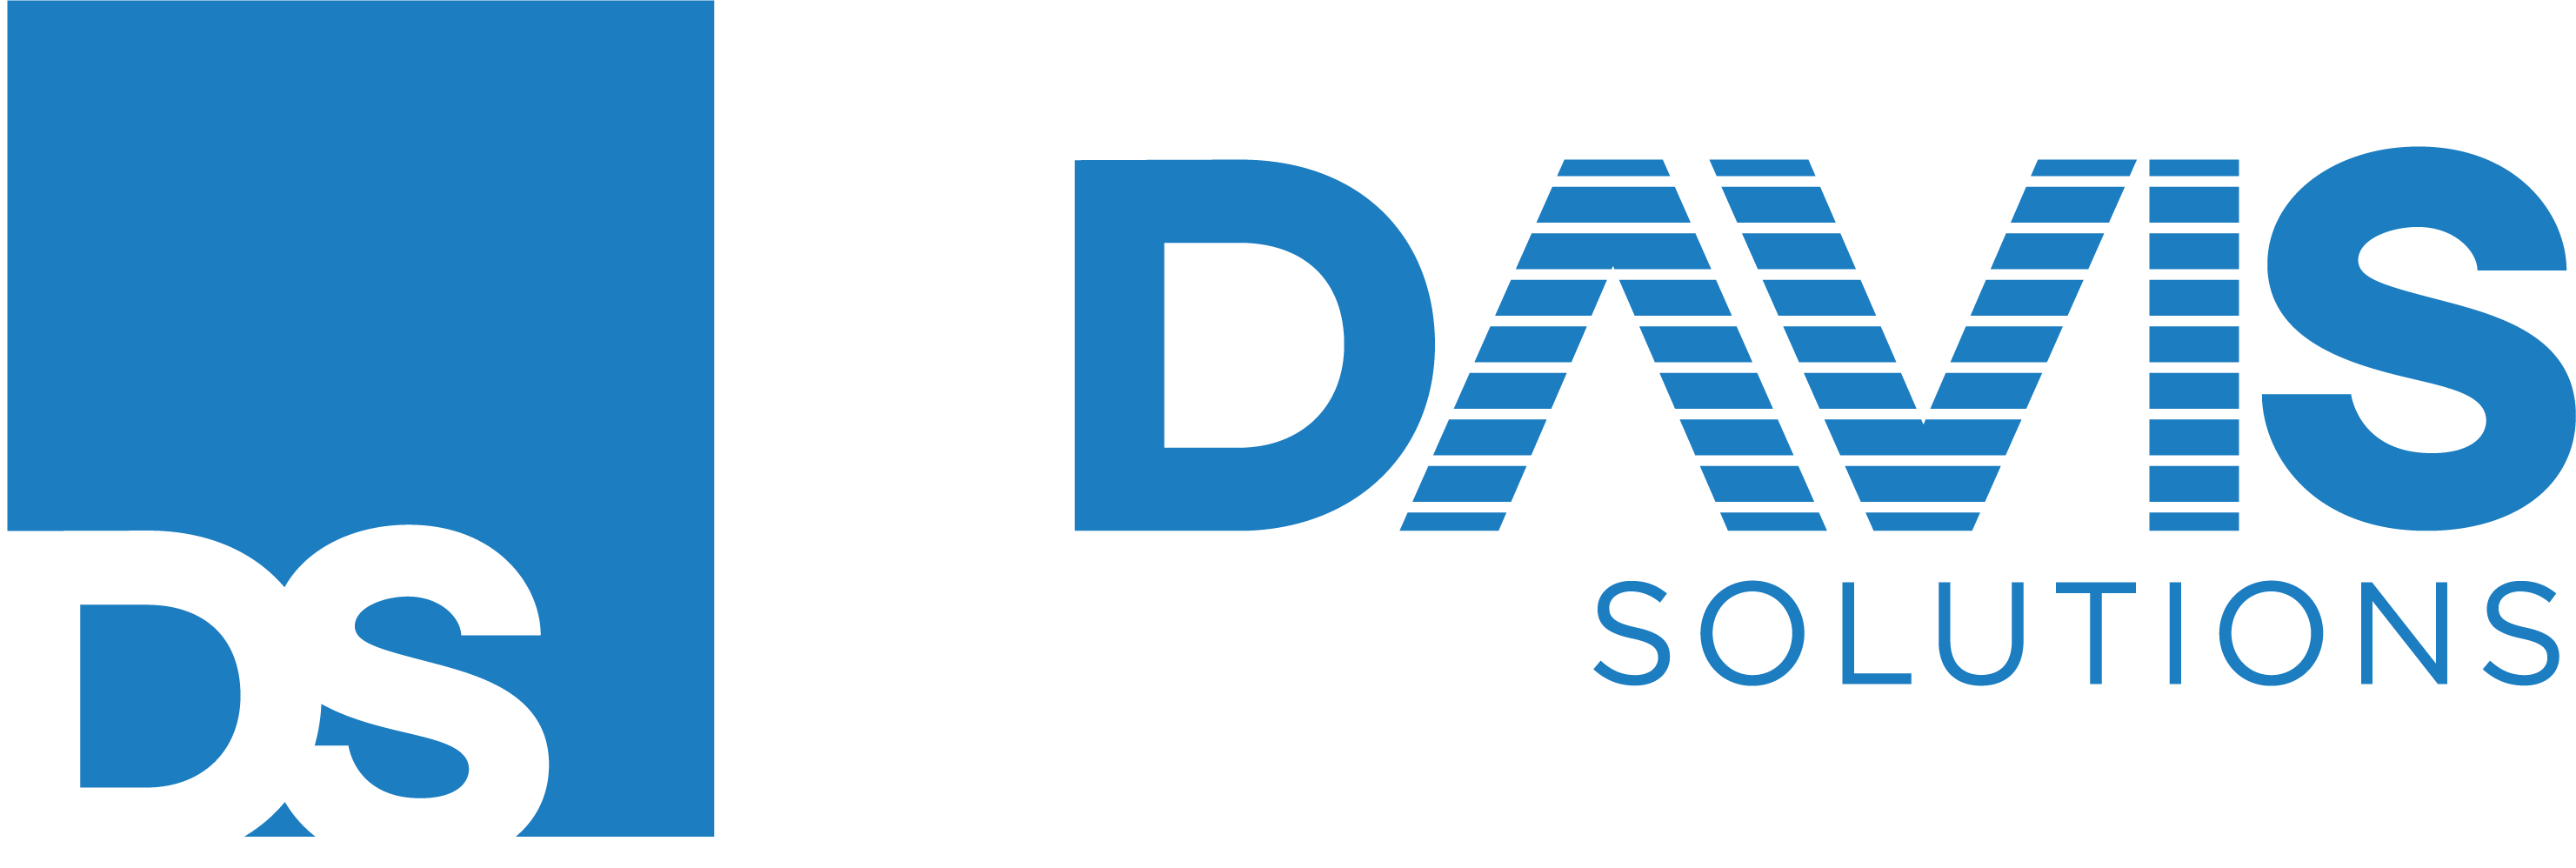 davis solutions IT - GateKeeper proximity security solutions partner.